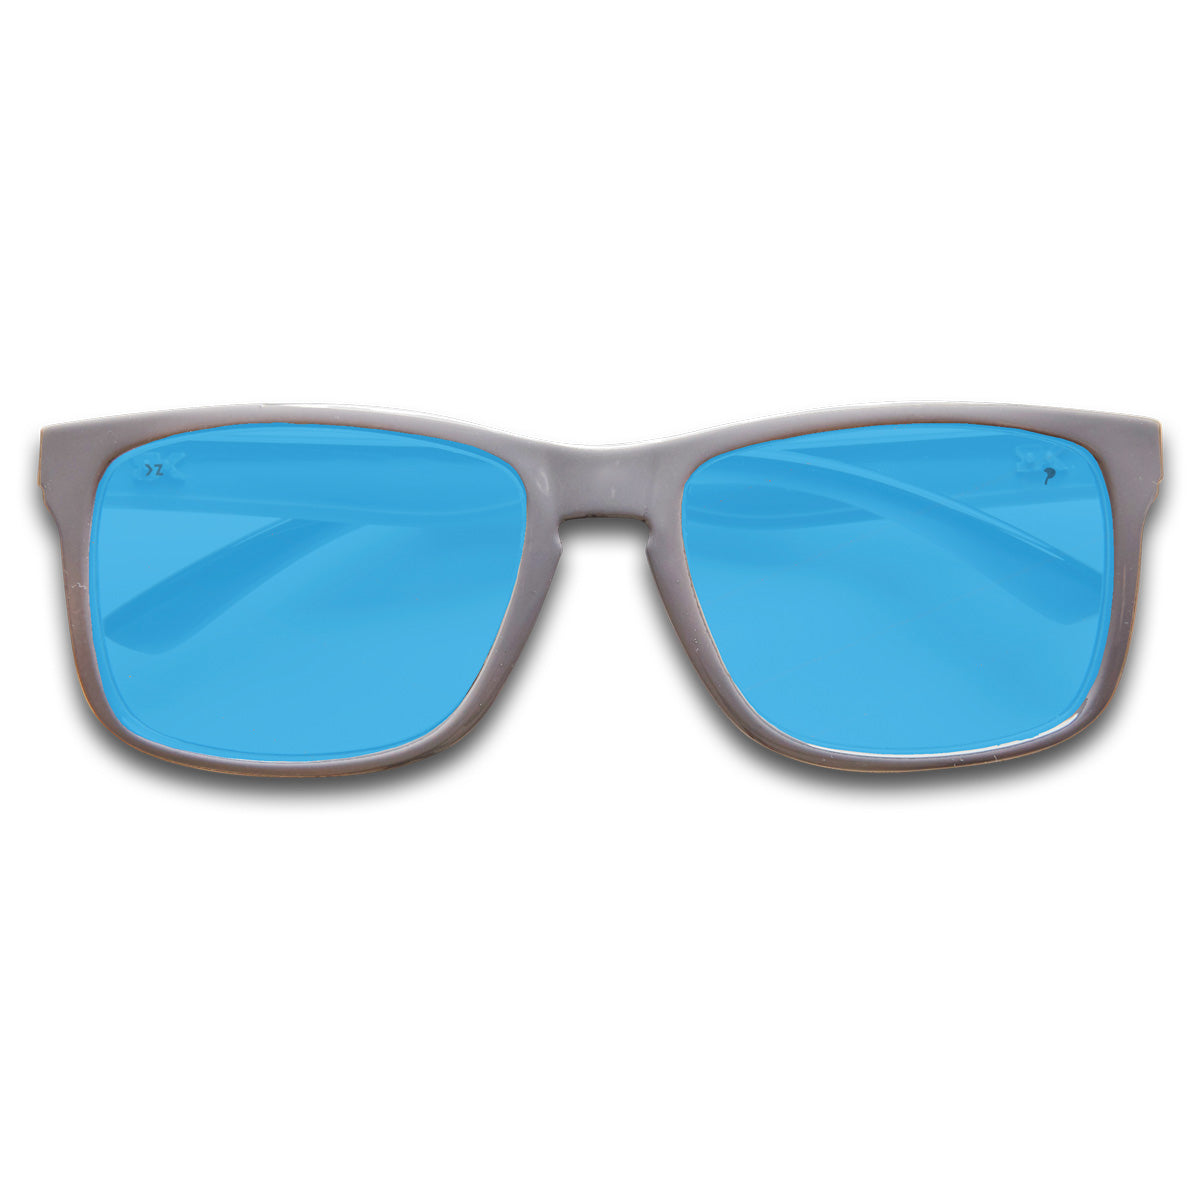 Lagos - Floating Sunglasses 1 KZ Glossy Grey / Blue Mirror